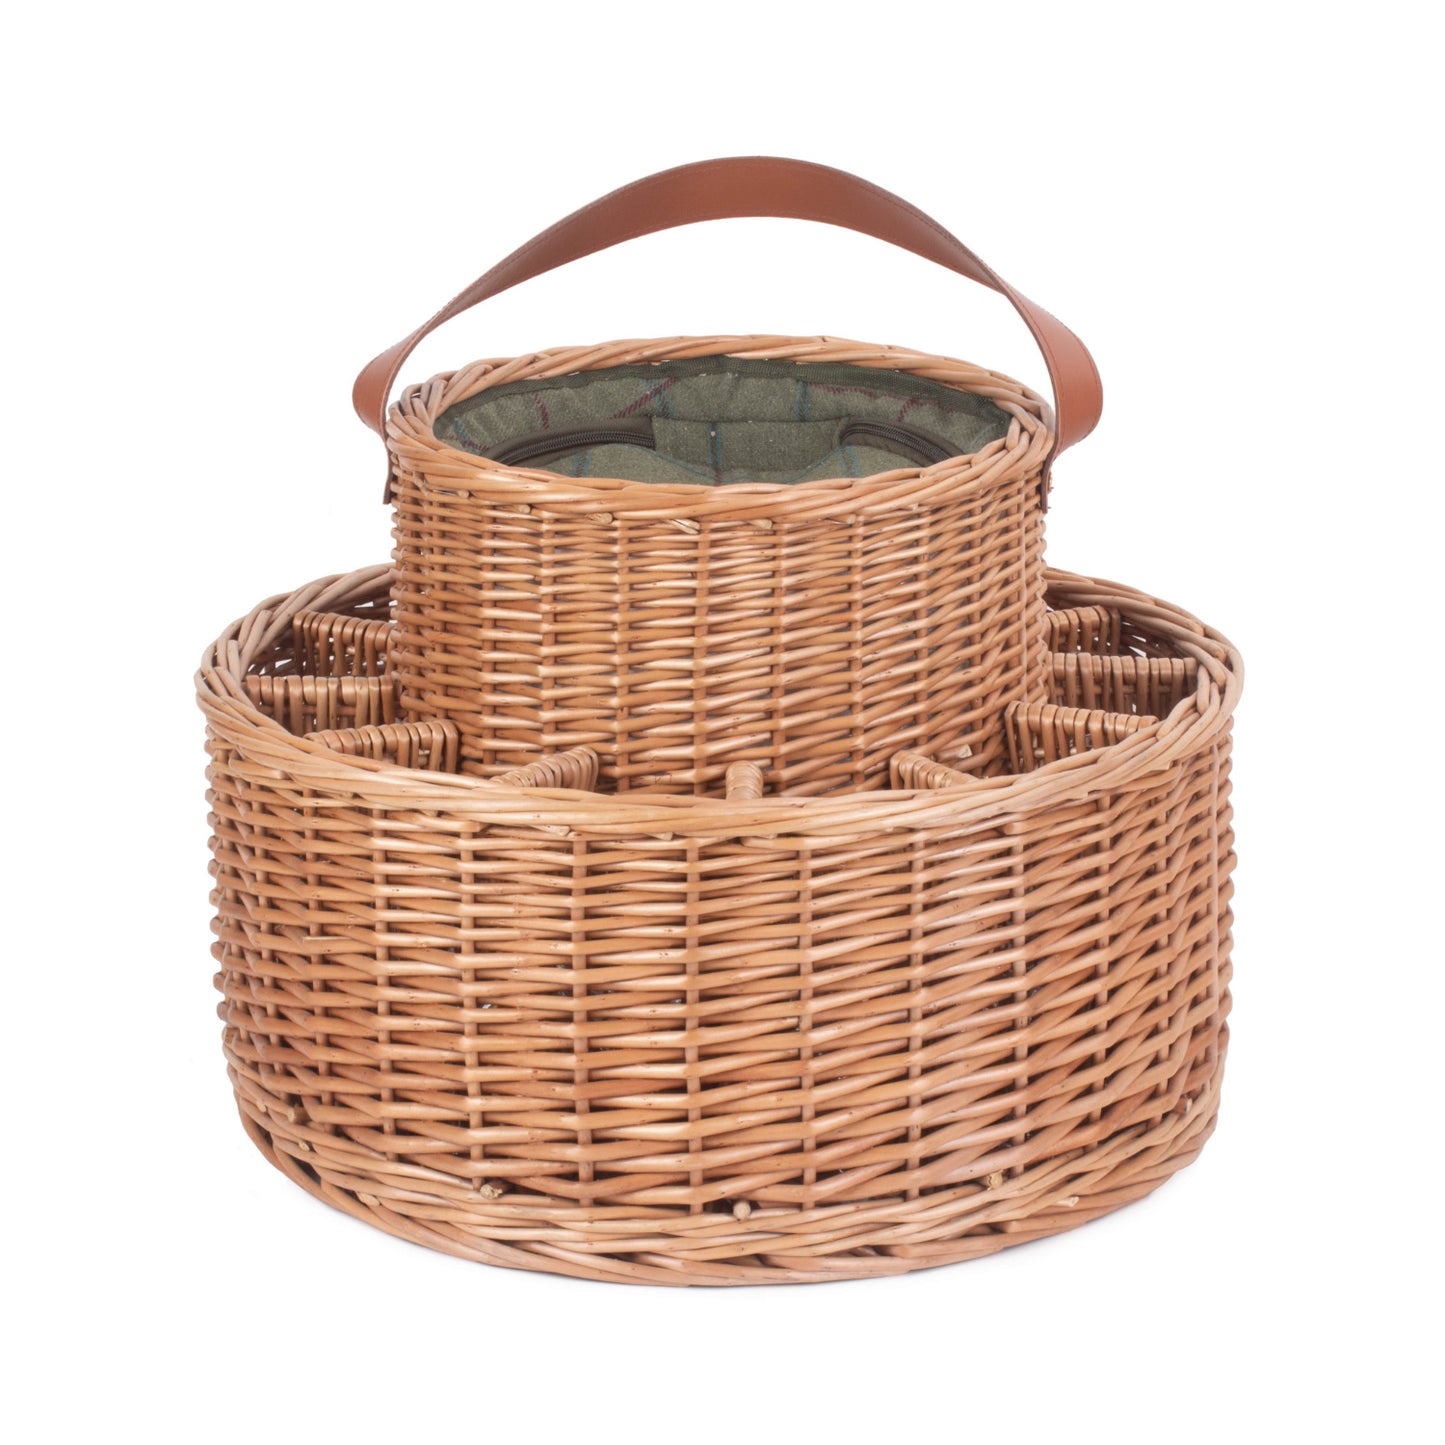 Green Tweed Chilled Garden Party Basket